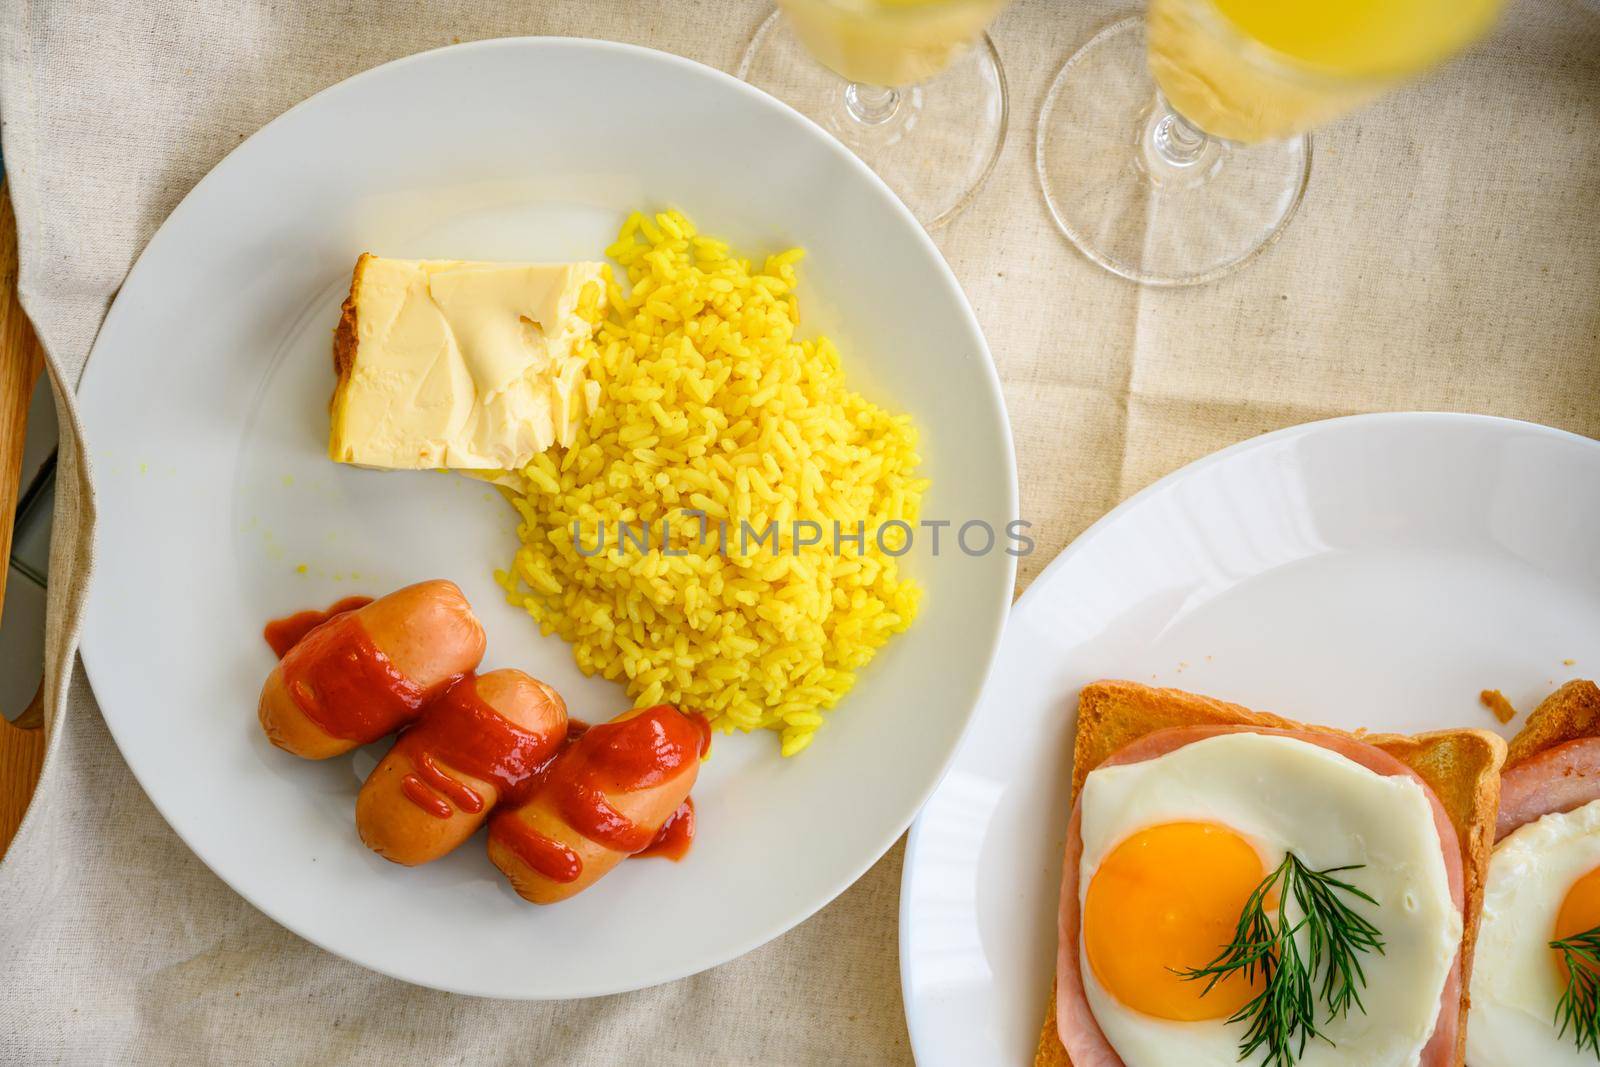 Breakfast sausage set with fried egg set